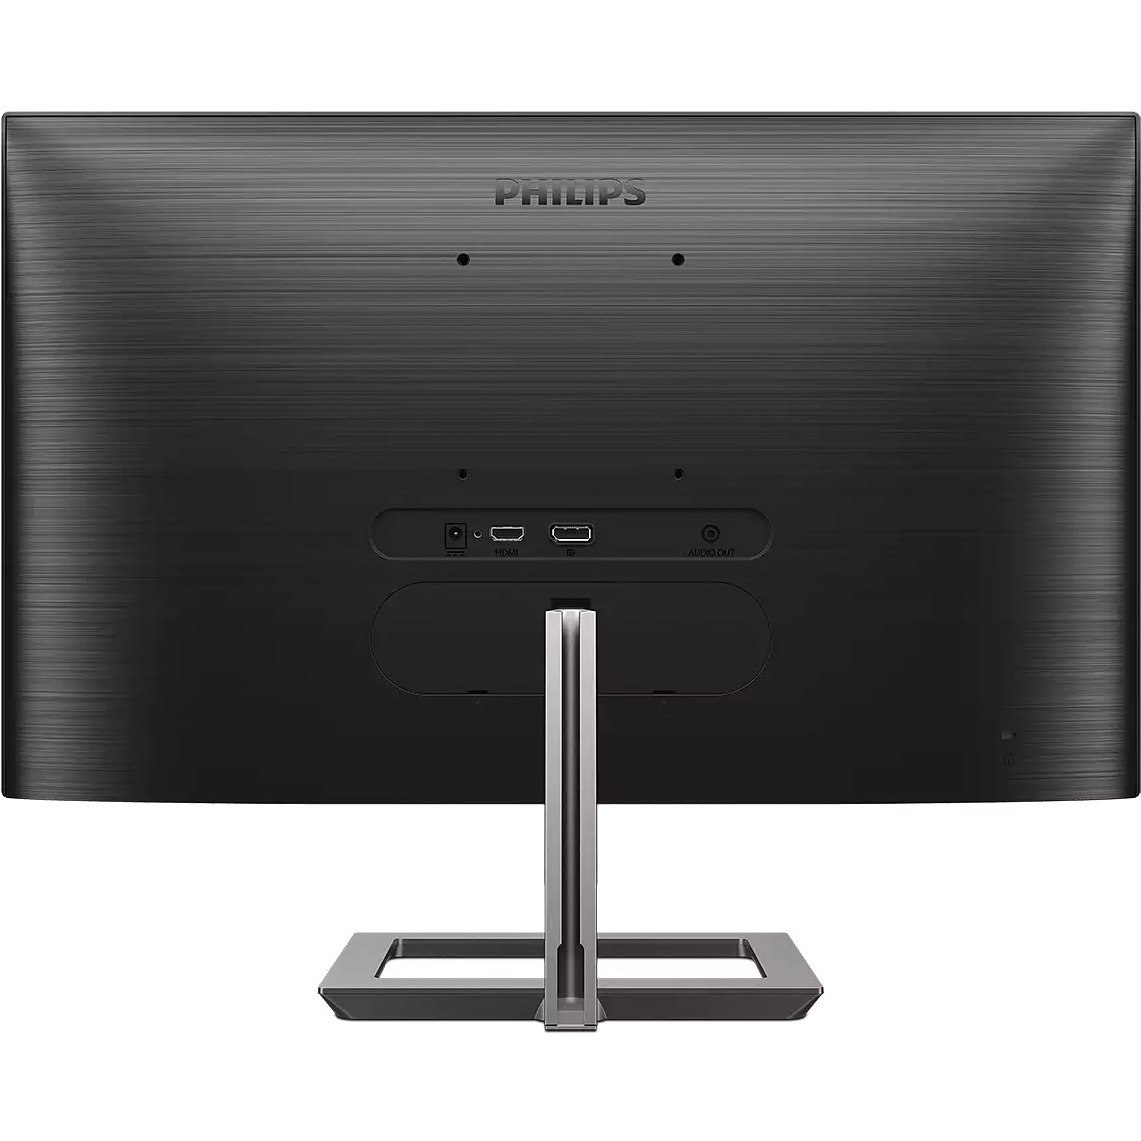 Philips 272E1GAJ 68.6 cm (27") Full HD WLED Gaming LCD Monitor - 16:9 - Textured Black, Dark Chrome